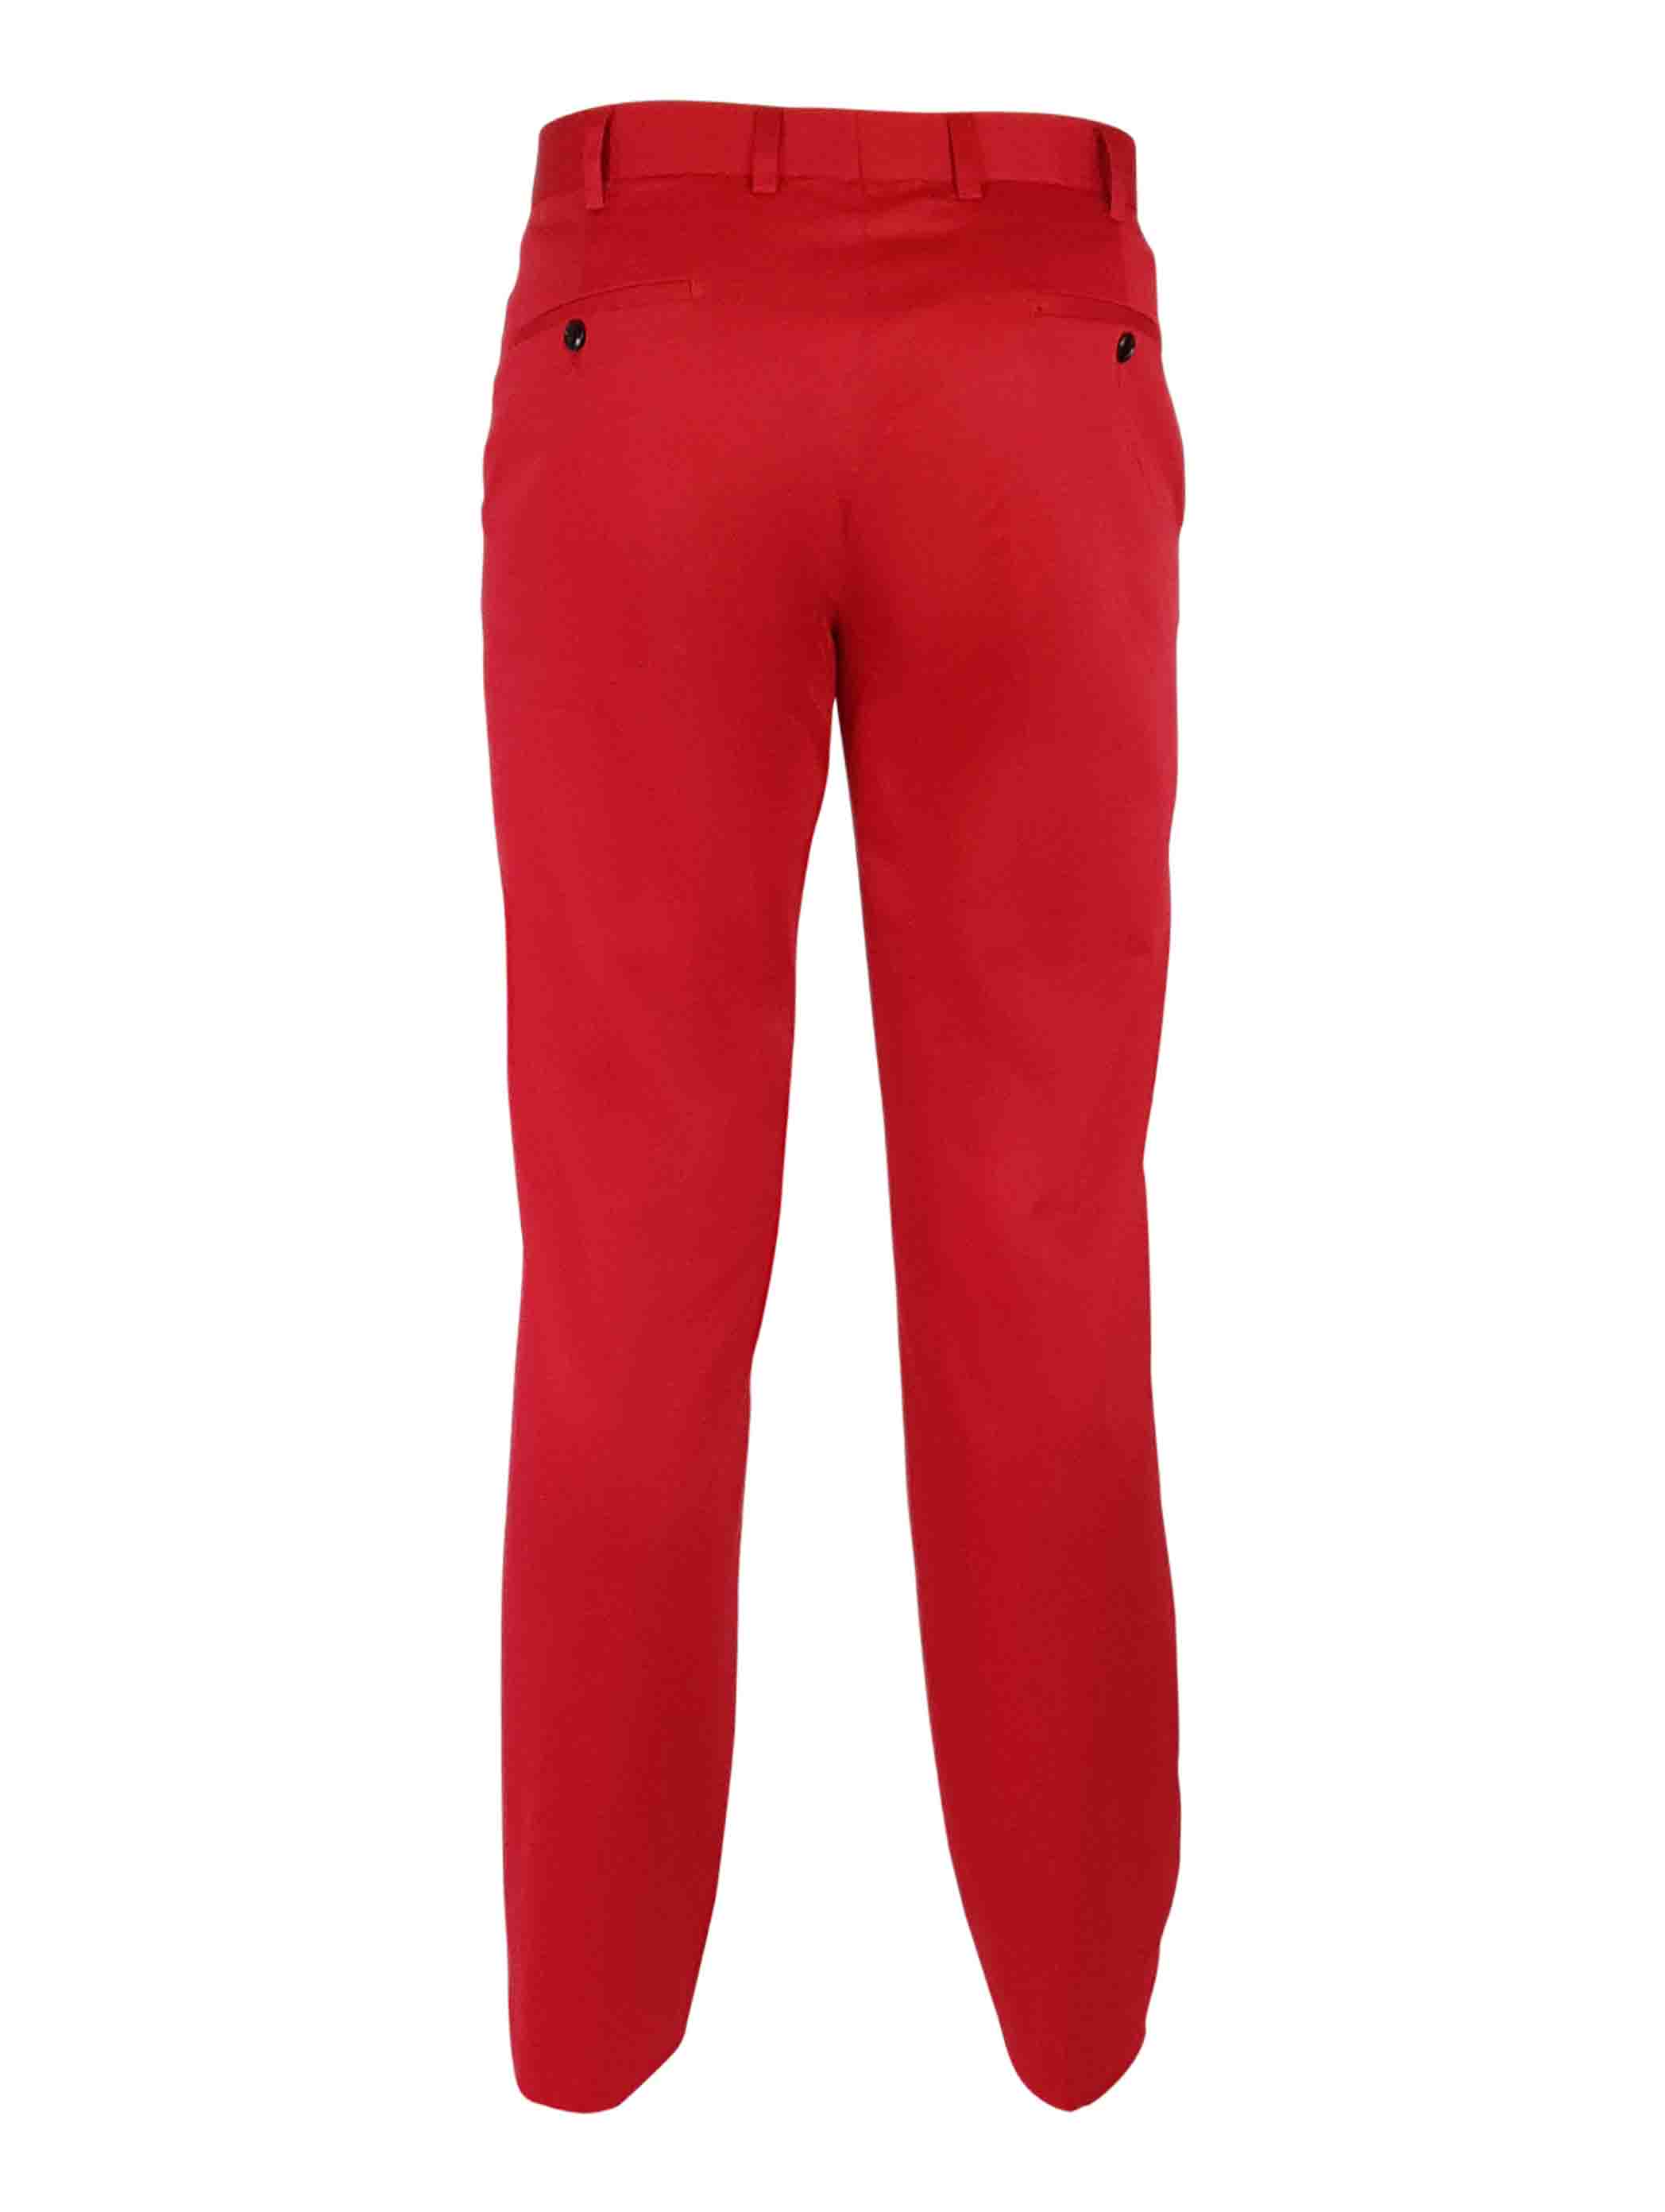 Men's Custom Chino - Red - Uniform Edit